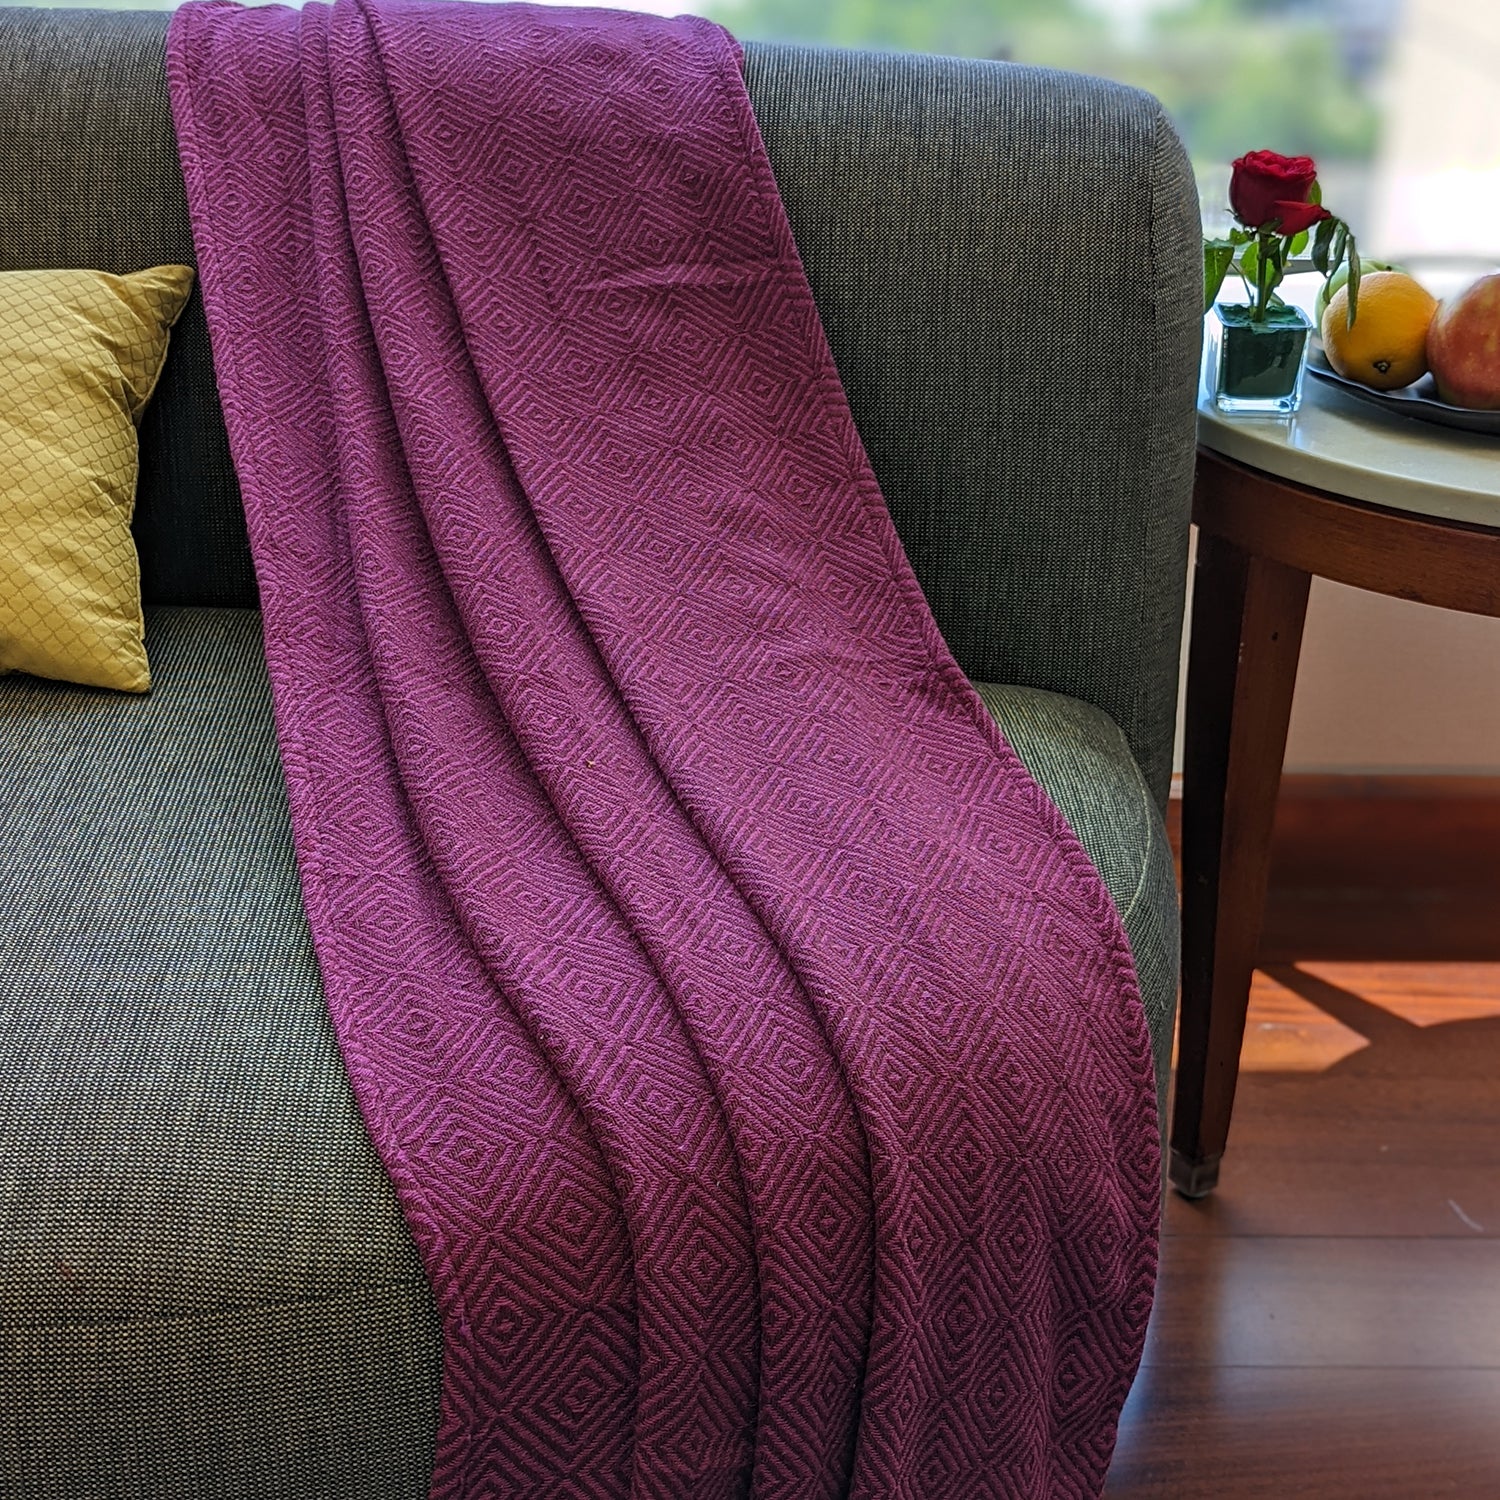 Avocado Linens Cotton Blend Sofa Throws - Argyle Maroon & Pink